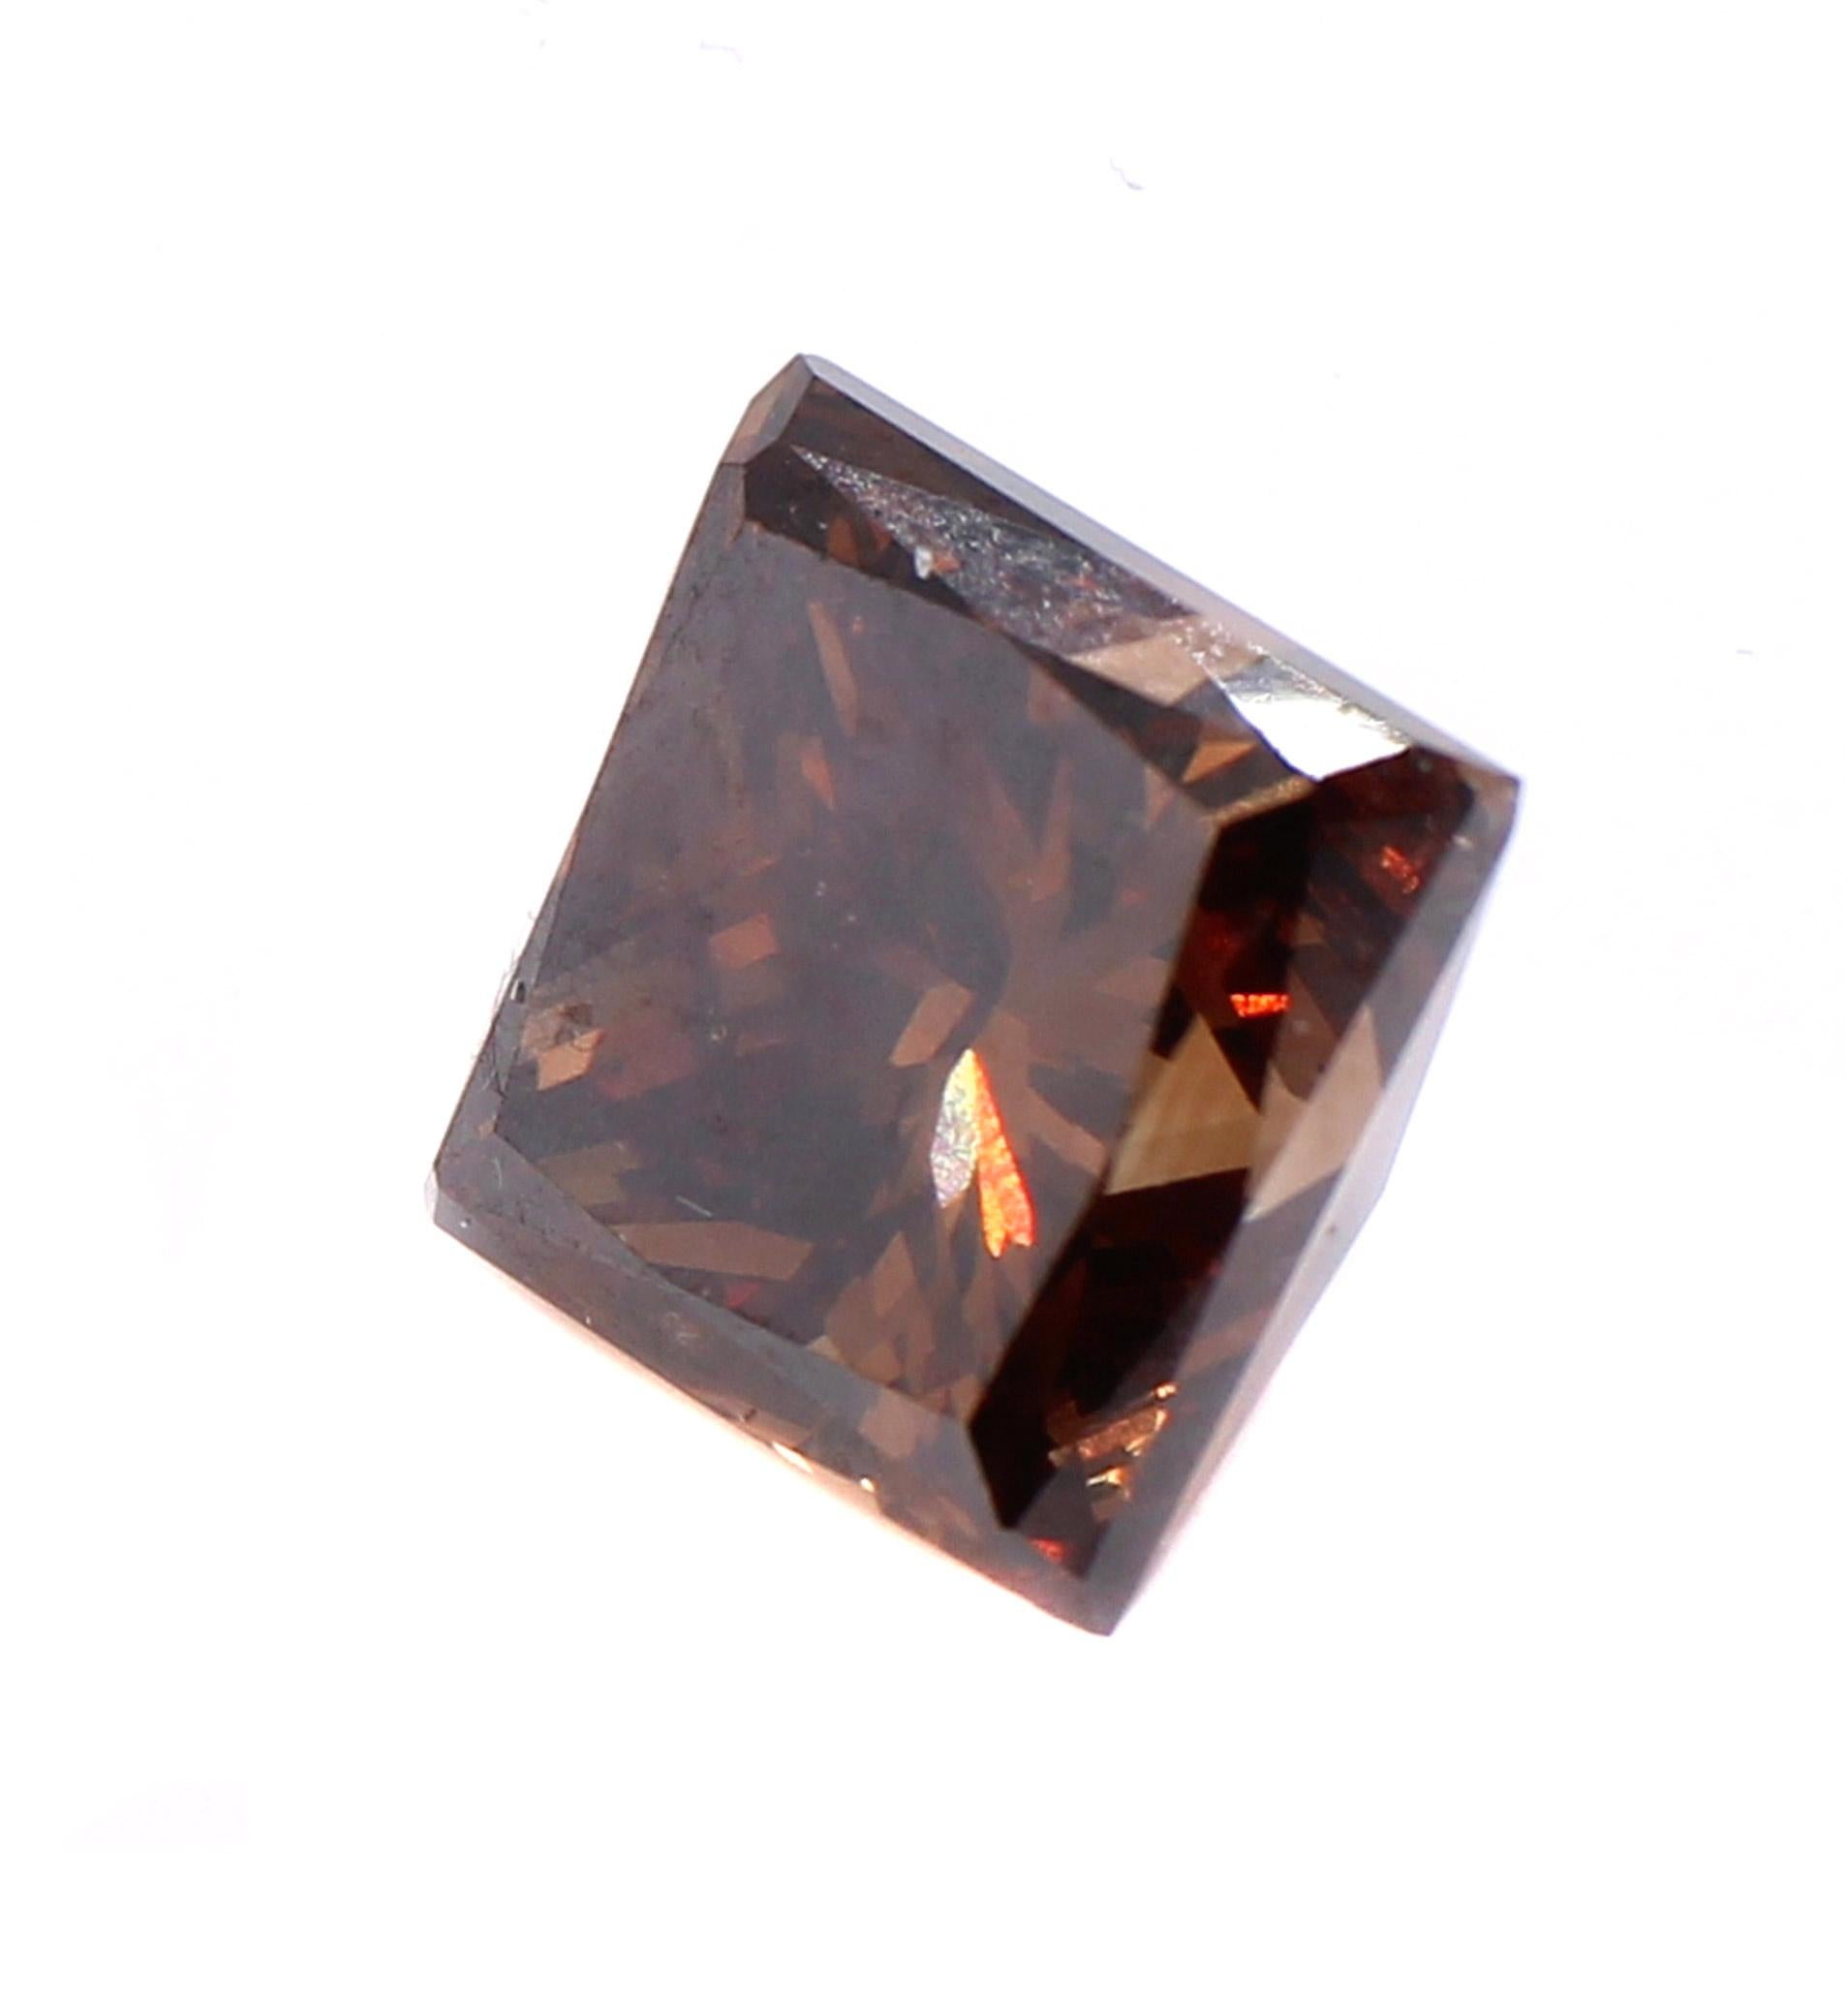 7.07 Carat Fancy Dark Orange Brown Princess Cut Diamond For Sale 2